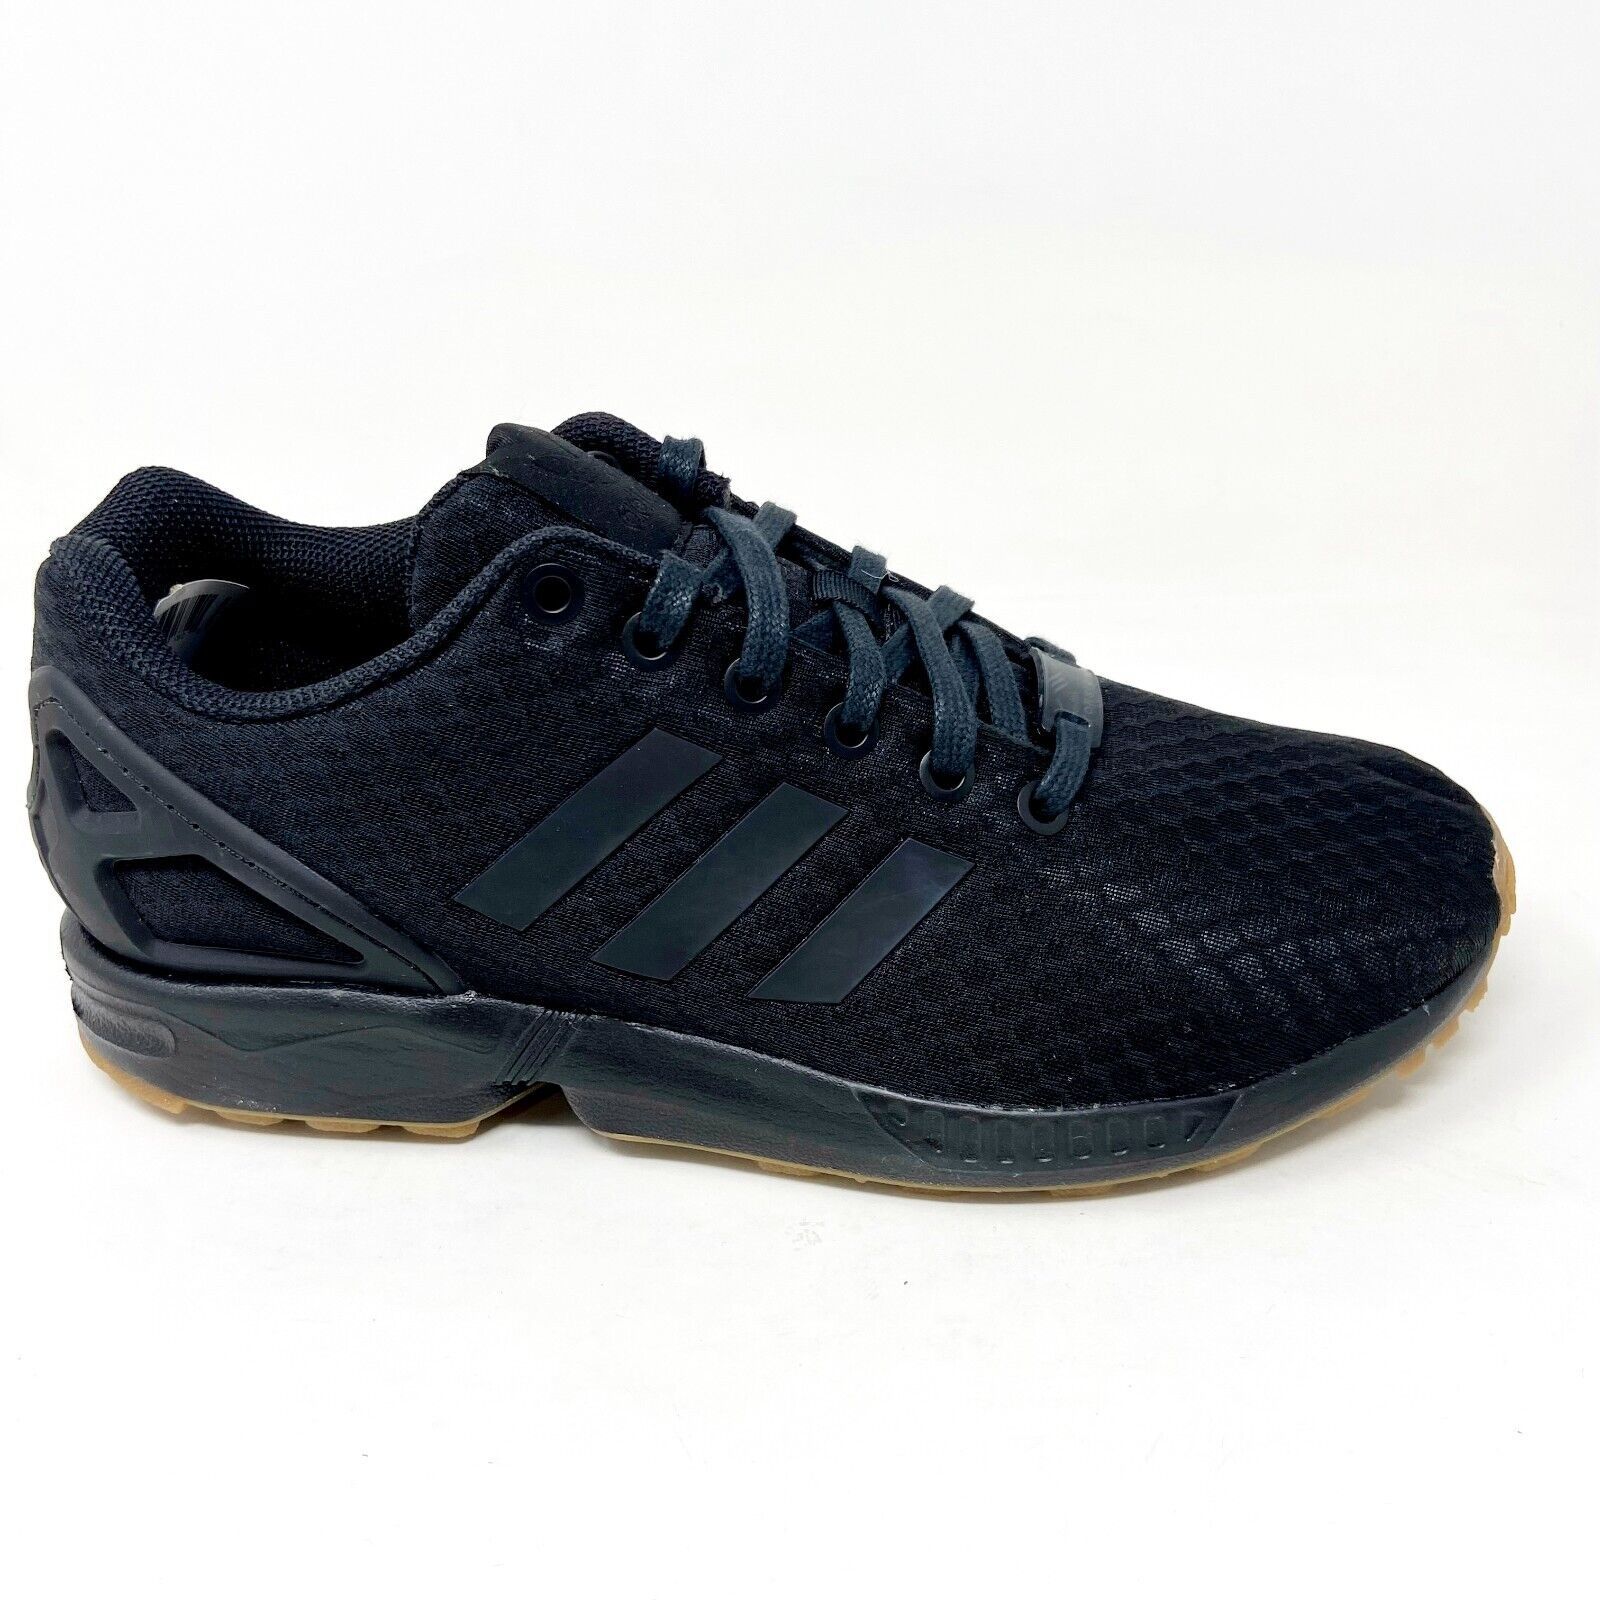 Adidas Originals ZX Flux Torsion Black Gum Mens Running Sneakers S79932